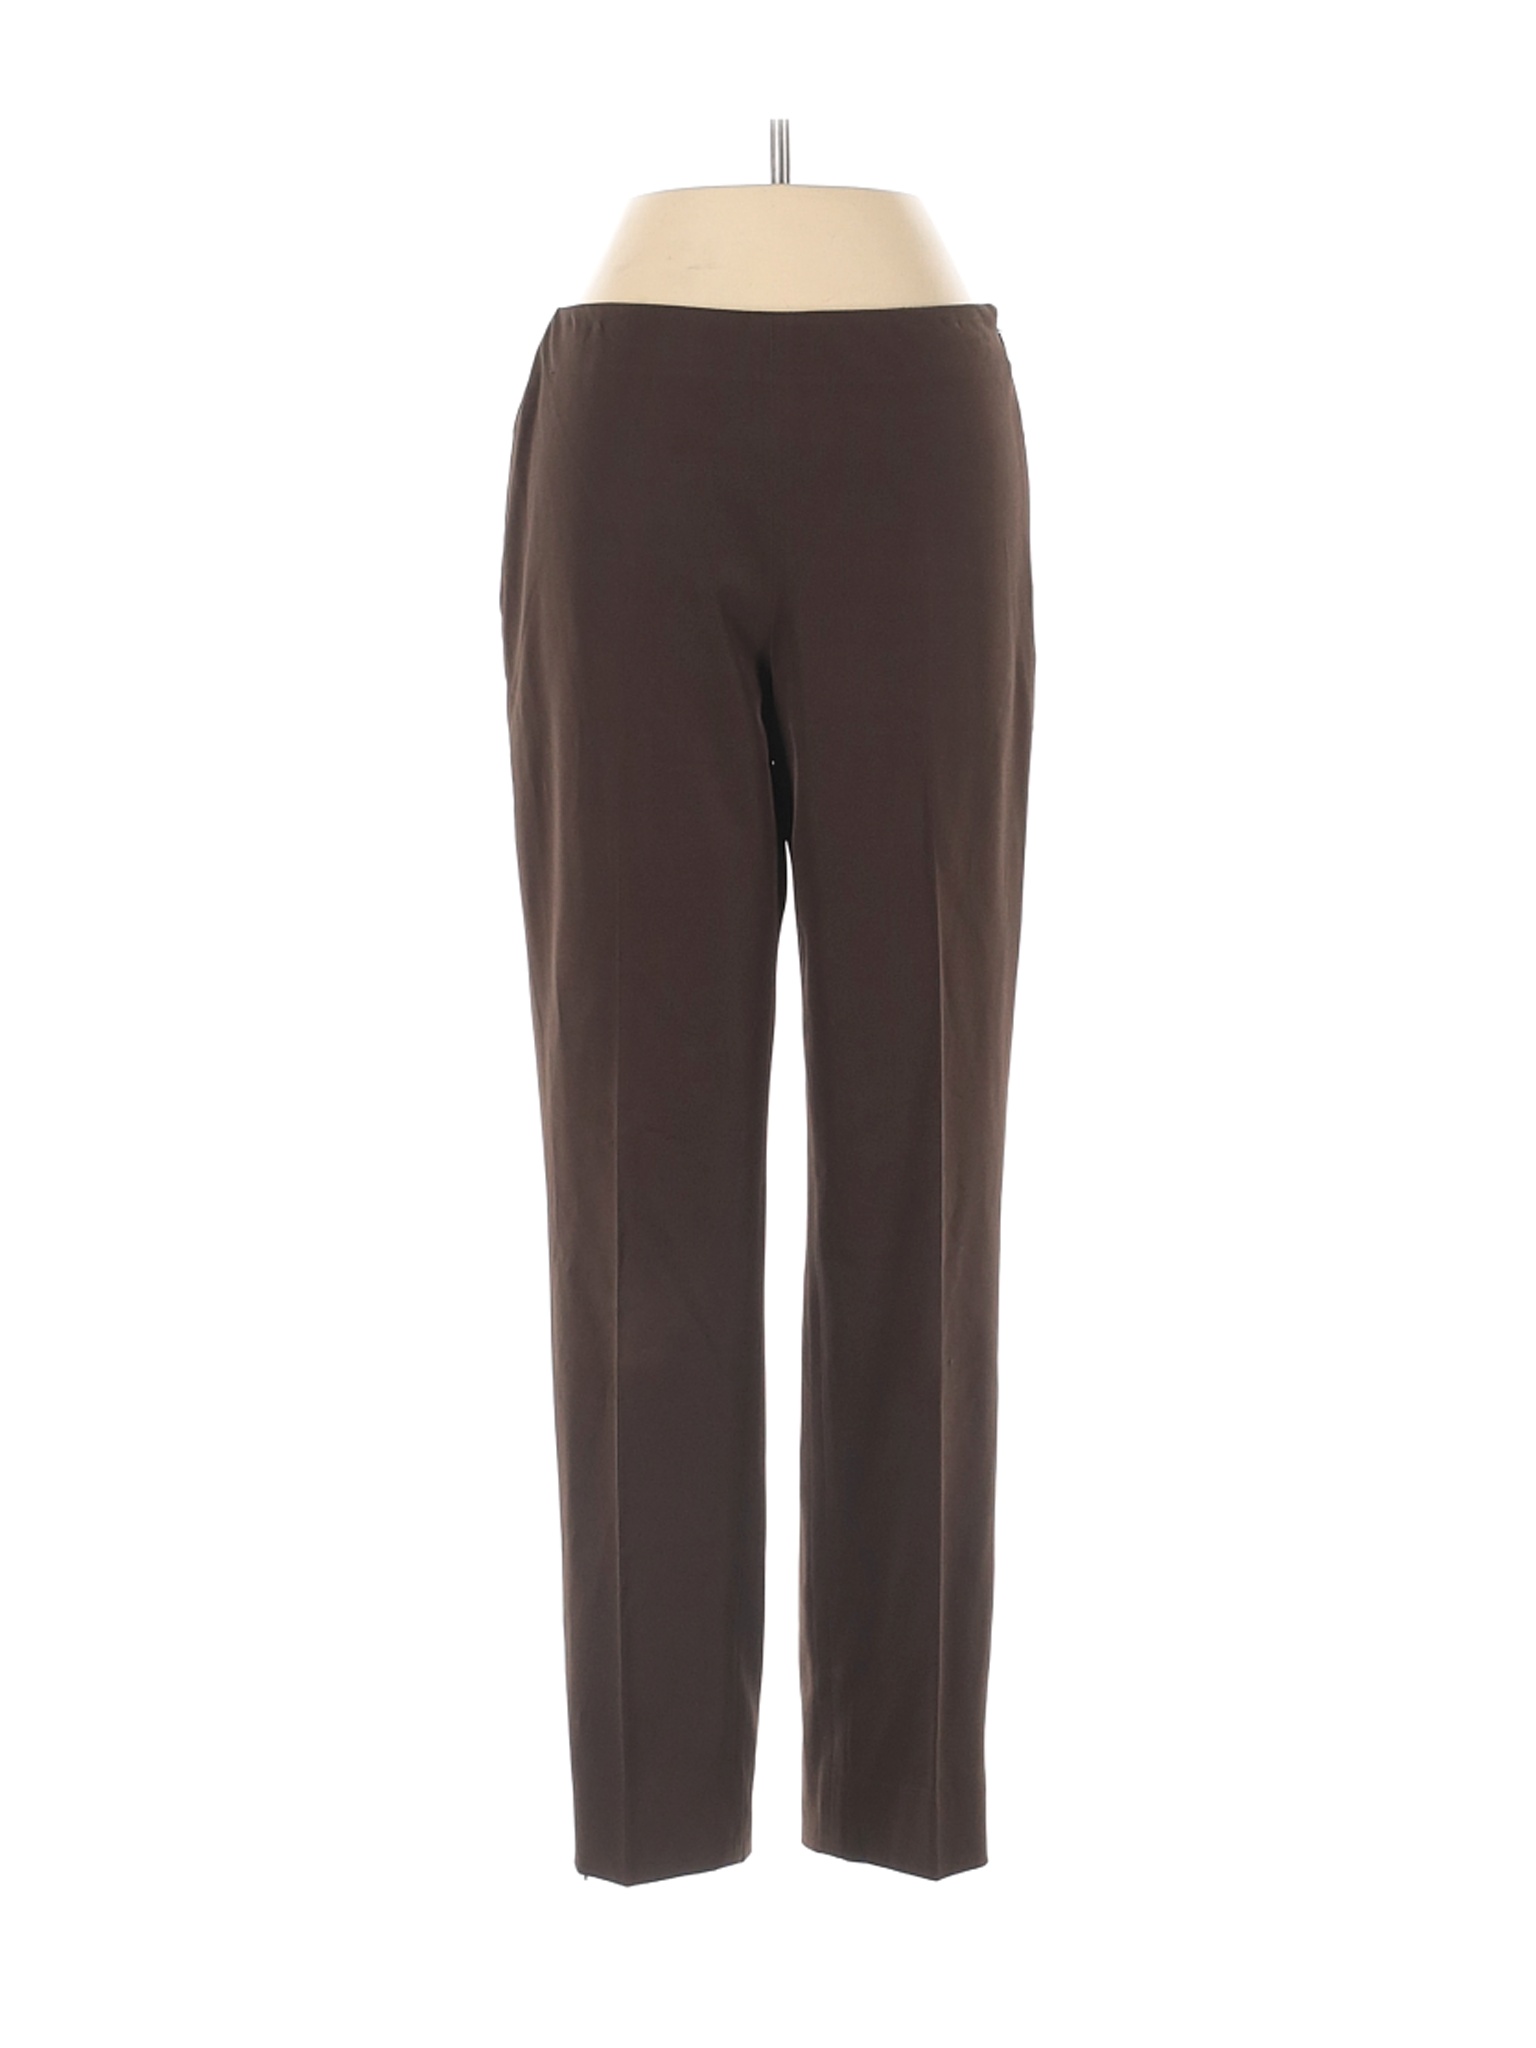 Prada Women Brown Dress Pants 40 italian | eBay